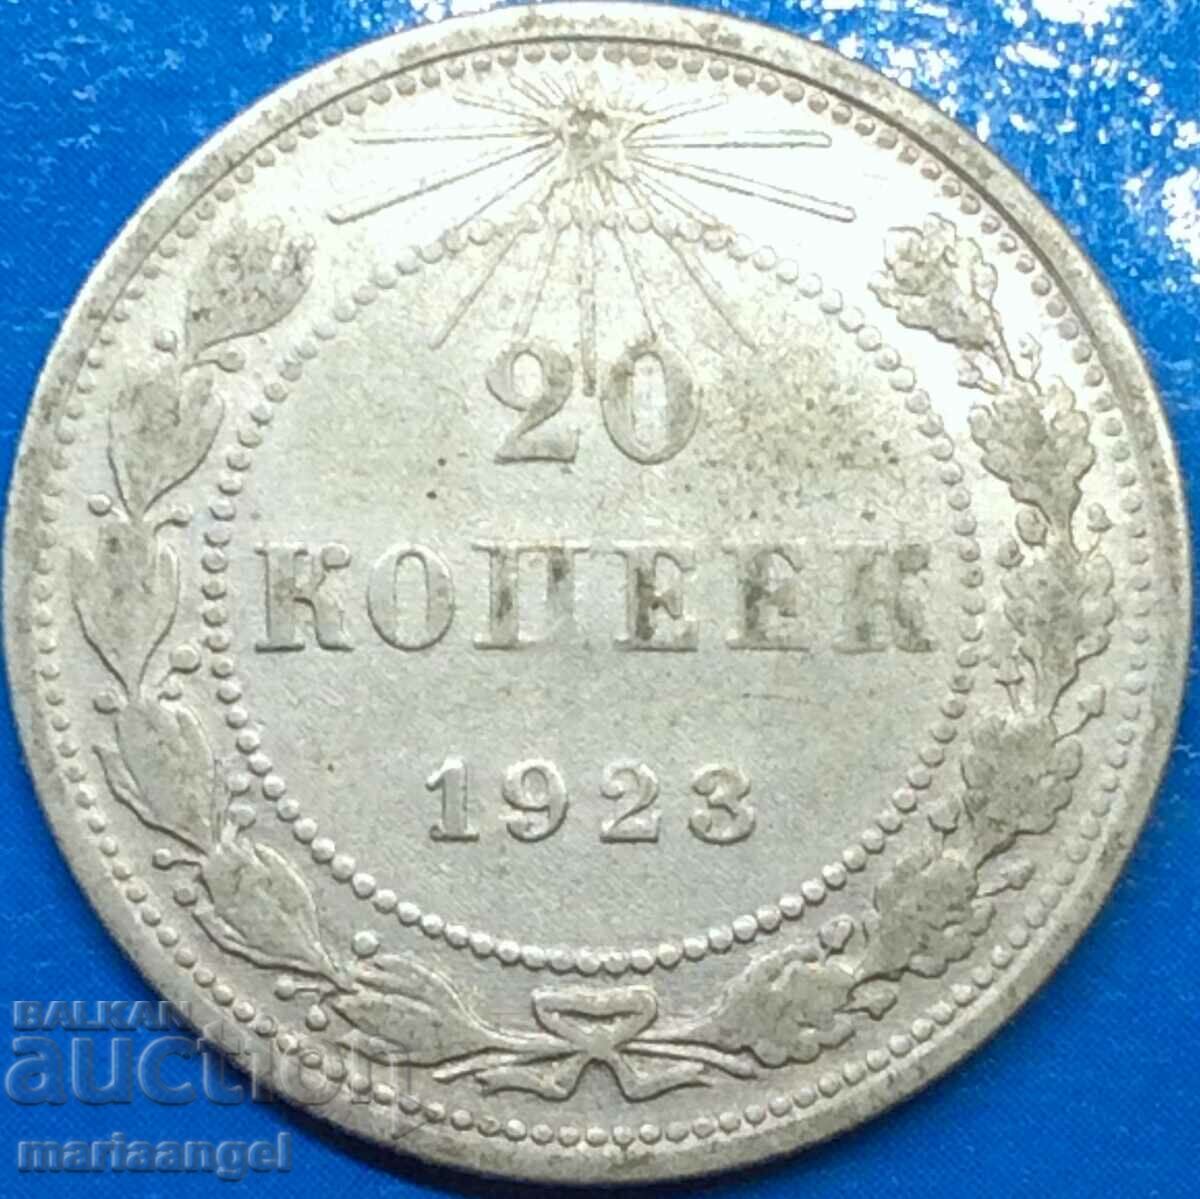 20 kopecks 1923 Russia RSFSR silver